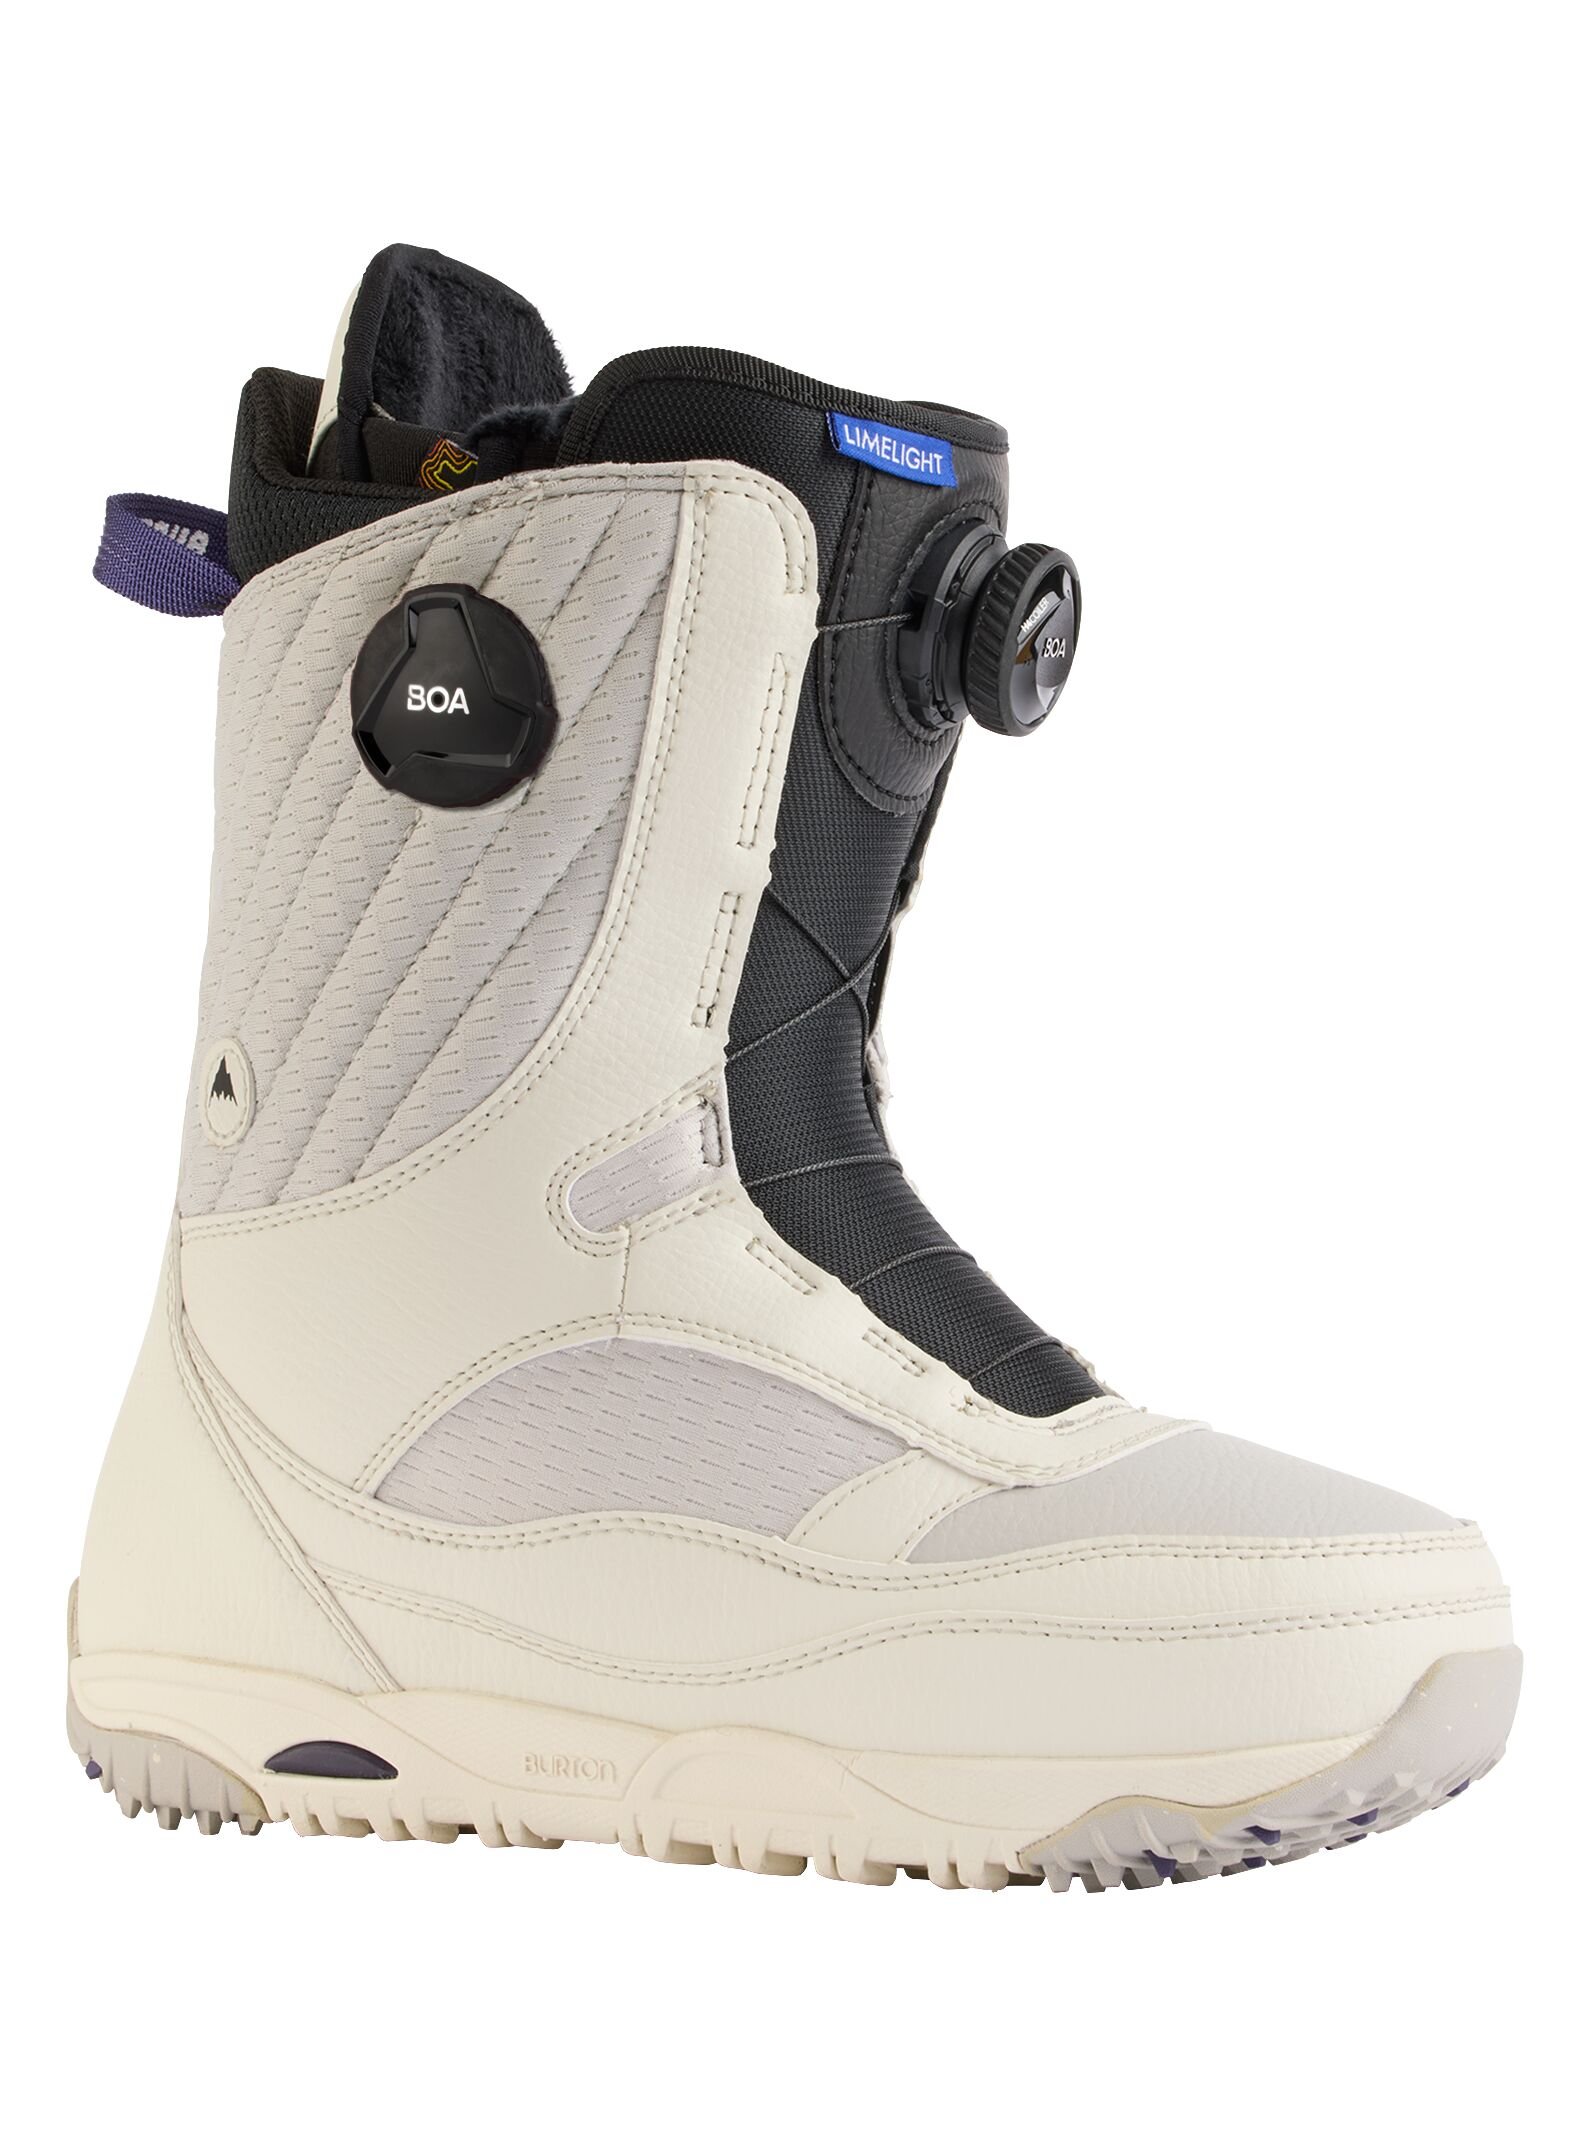 Women’s Limelight BOA®︎ Snowboard Boots - Wide